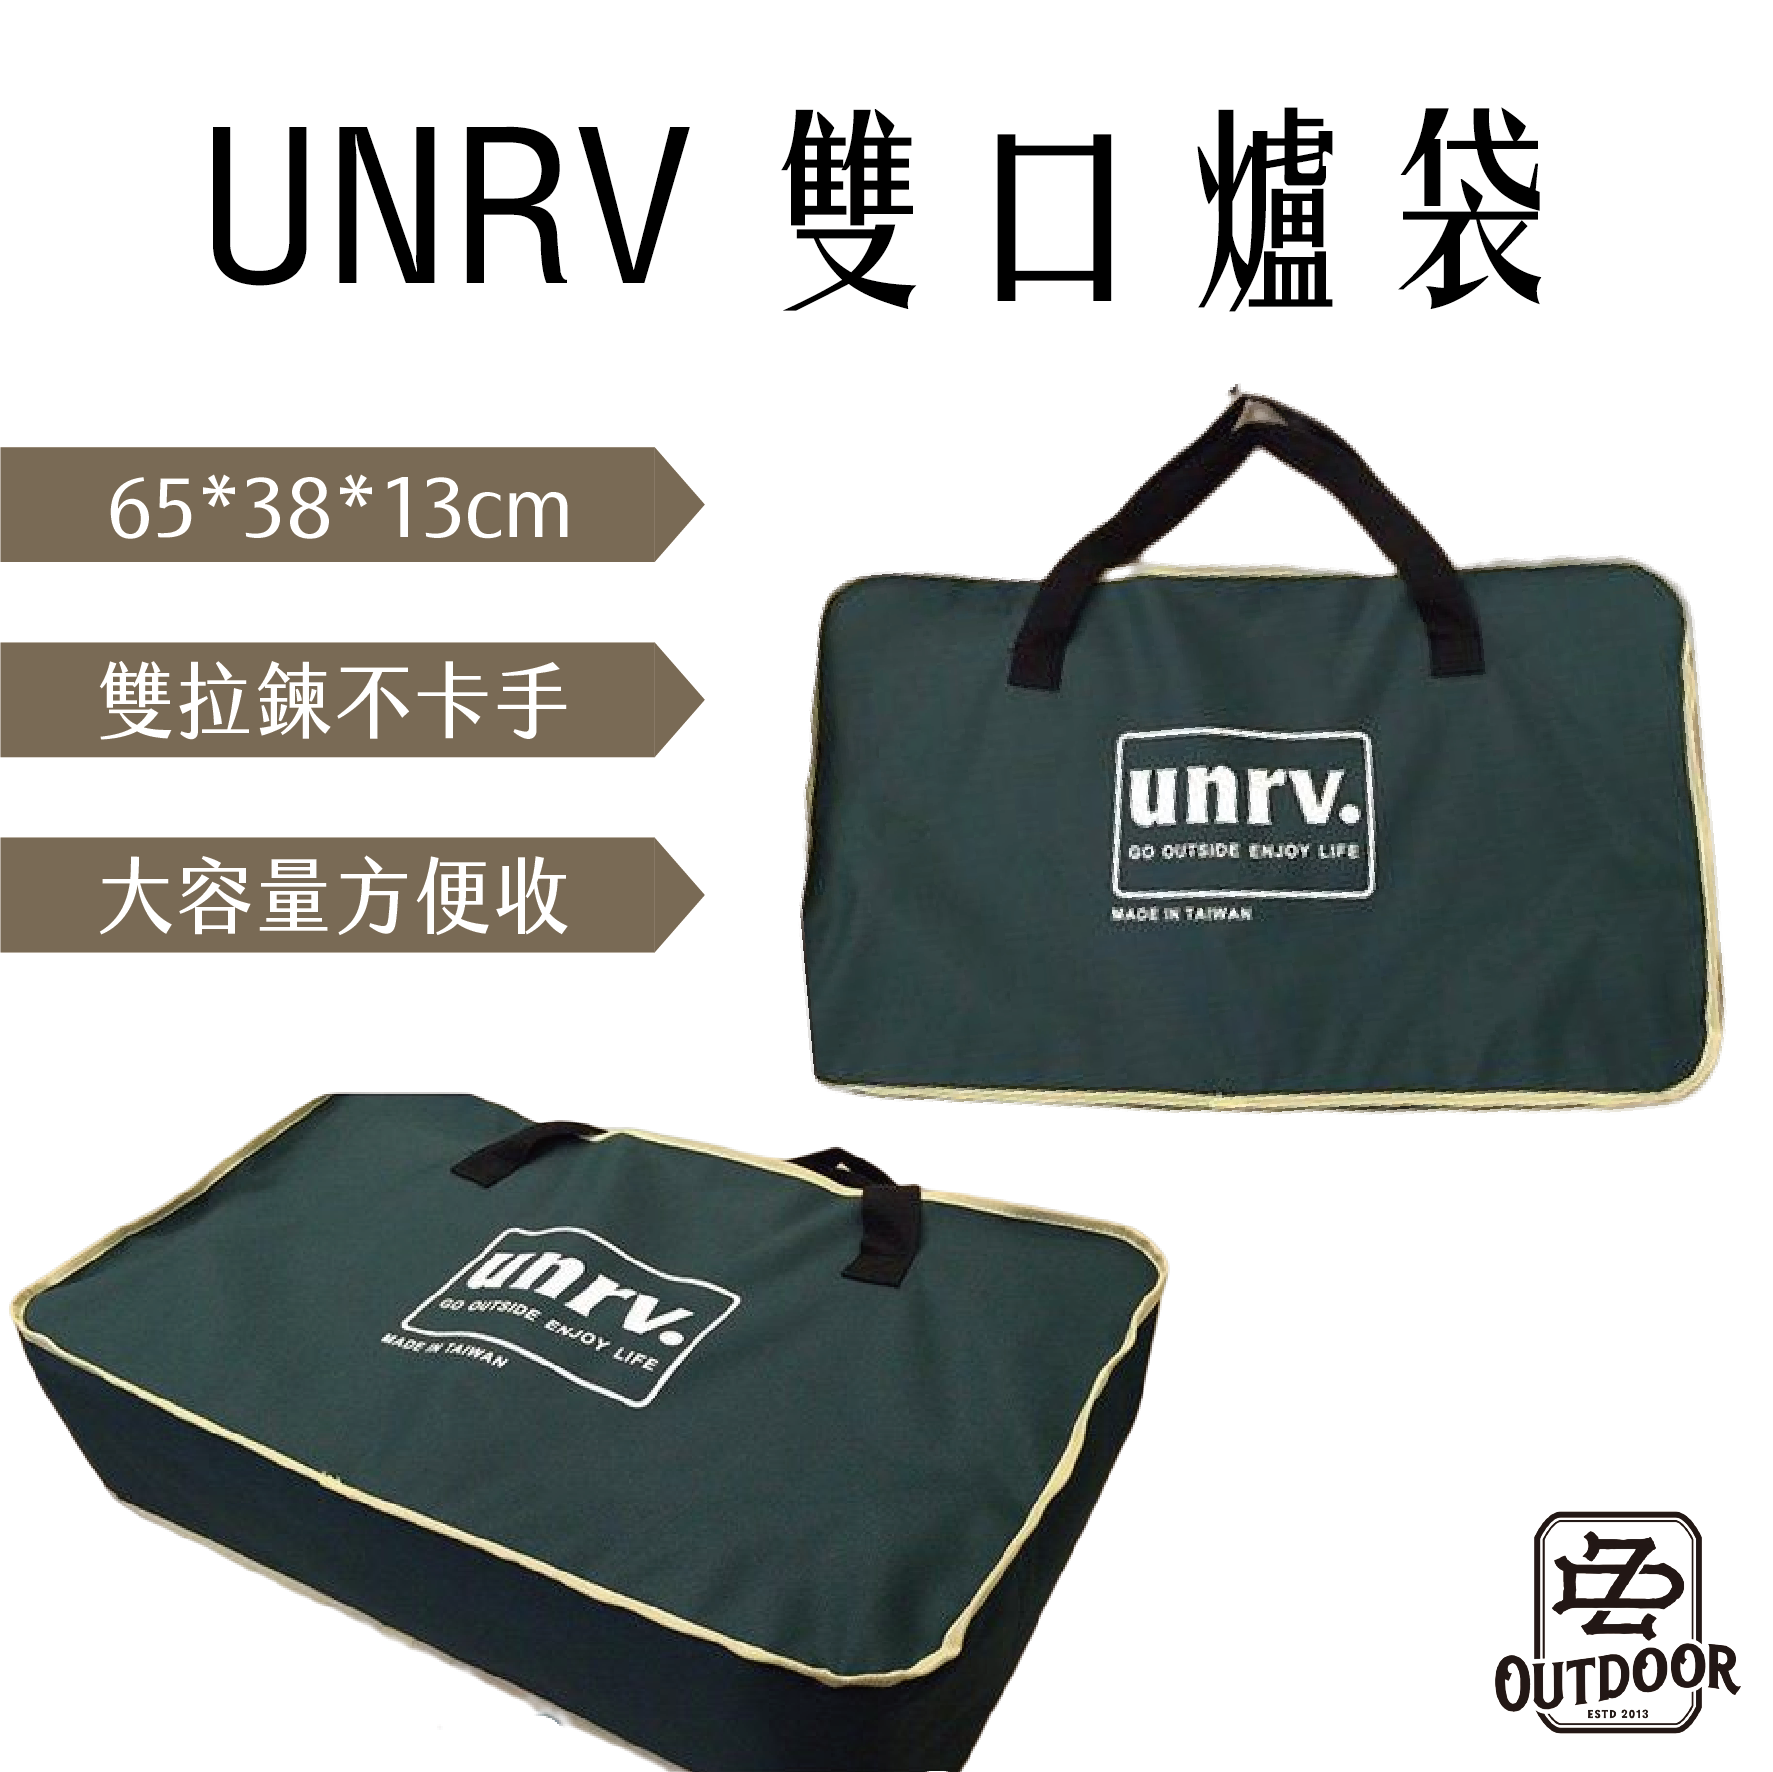 UNRV 雙口爐袋【ZD Outdoor】 邊布袋 收納袋 收納 儲放 置物袋 戶外 露營 野營